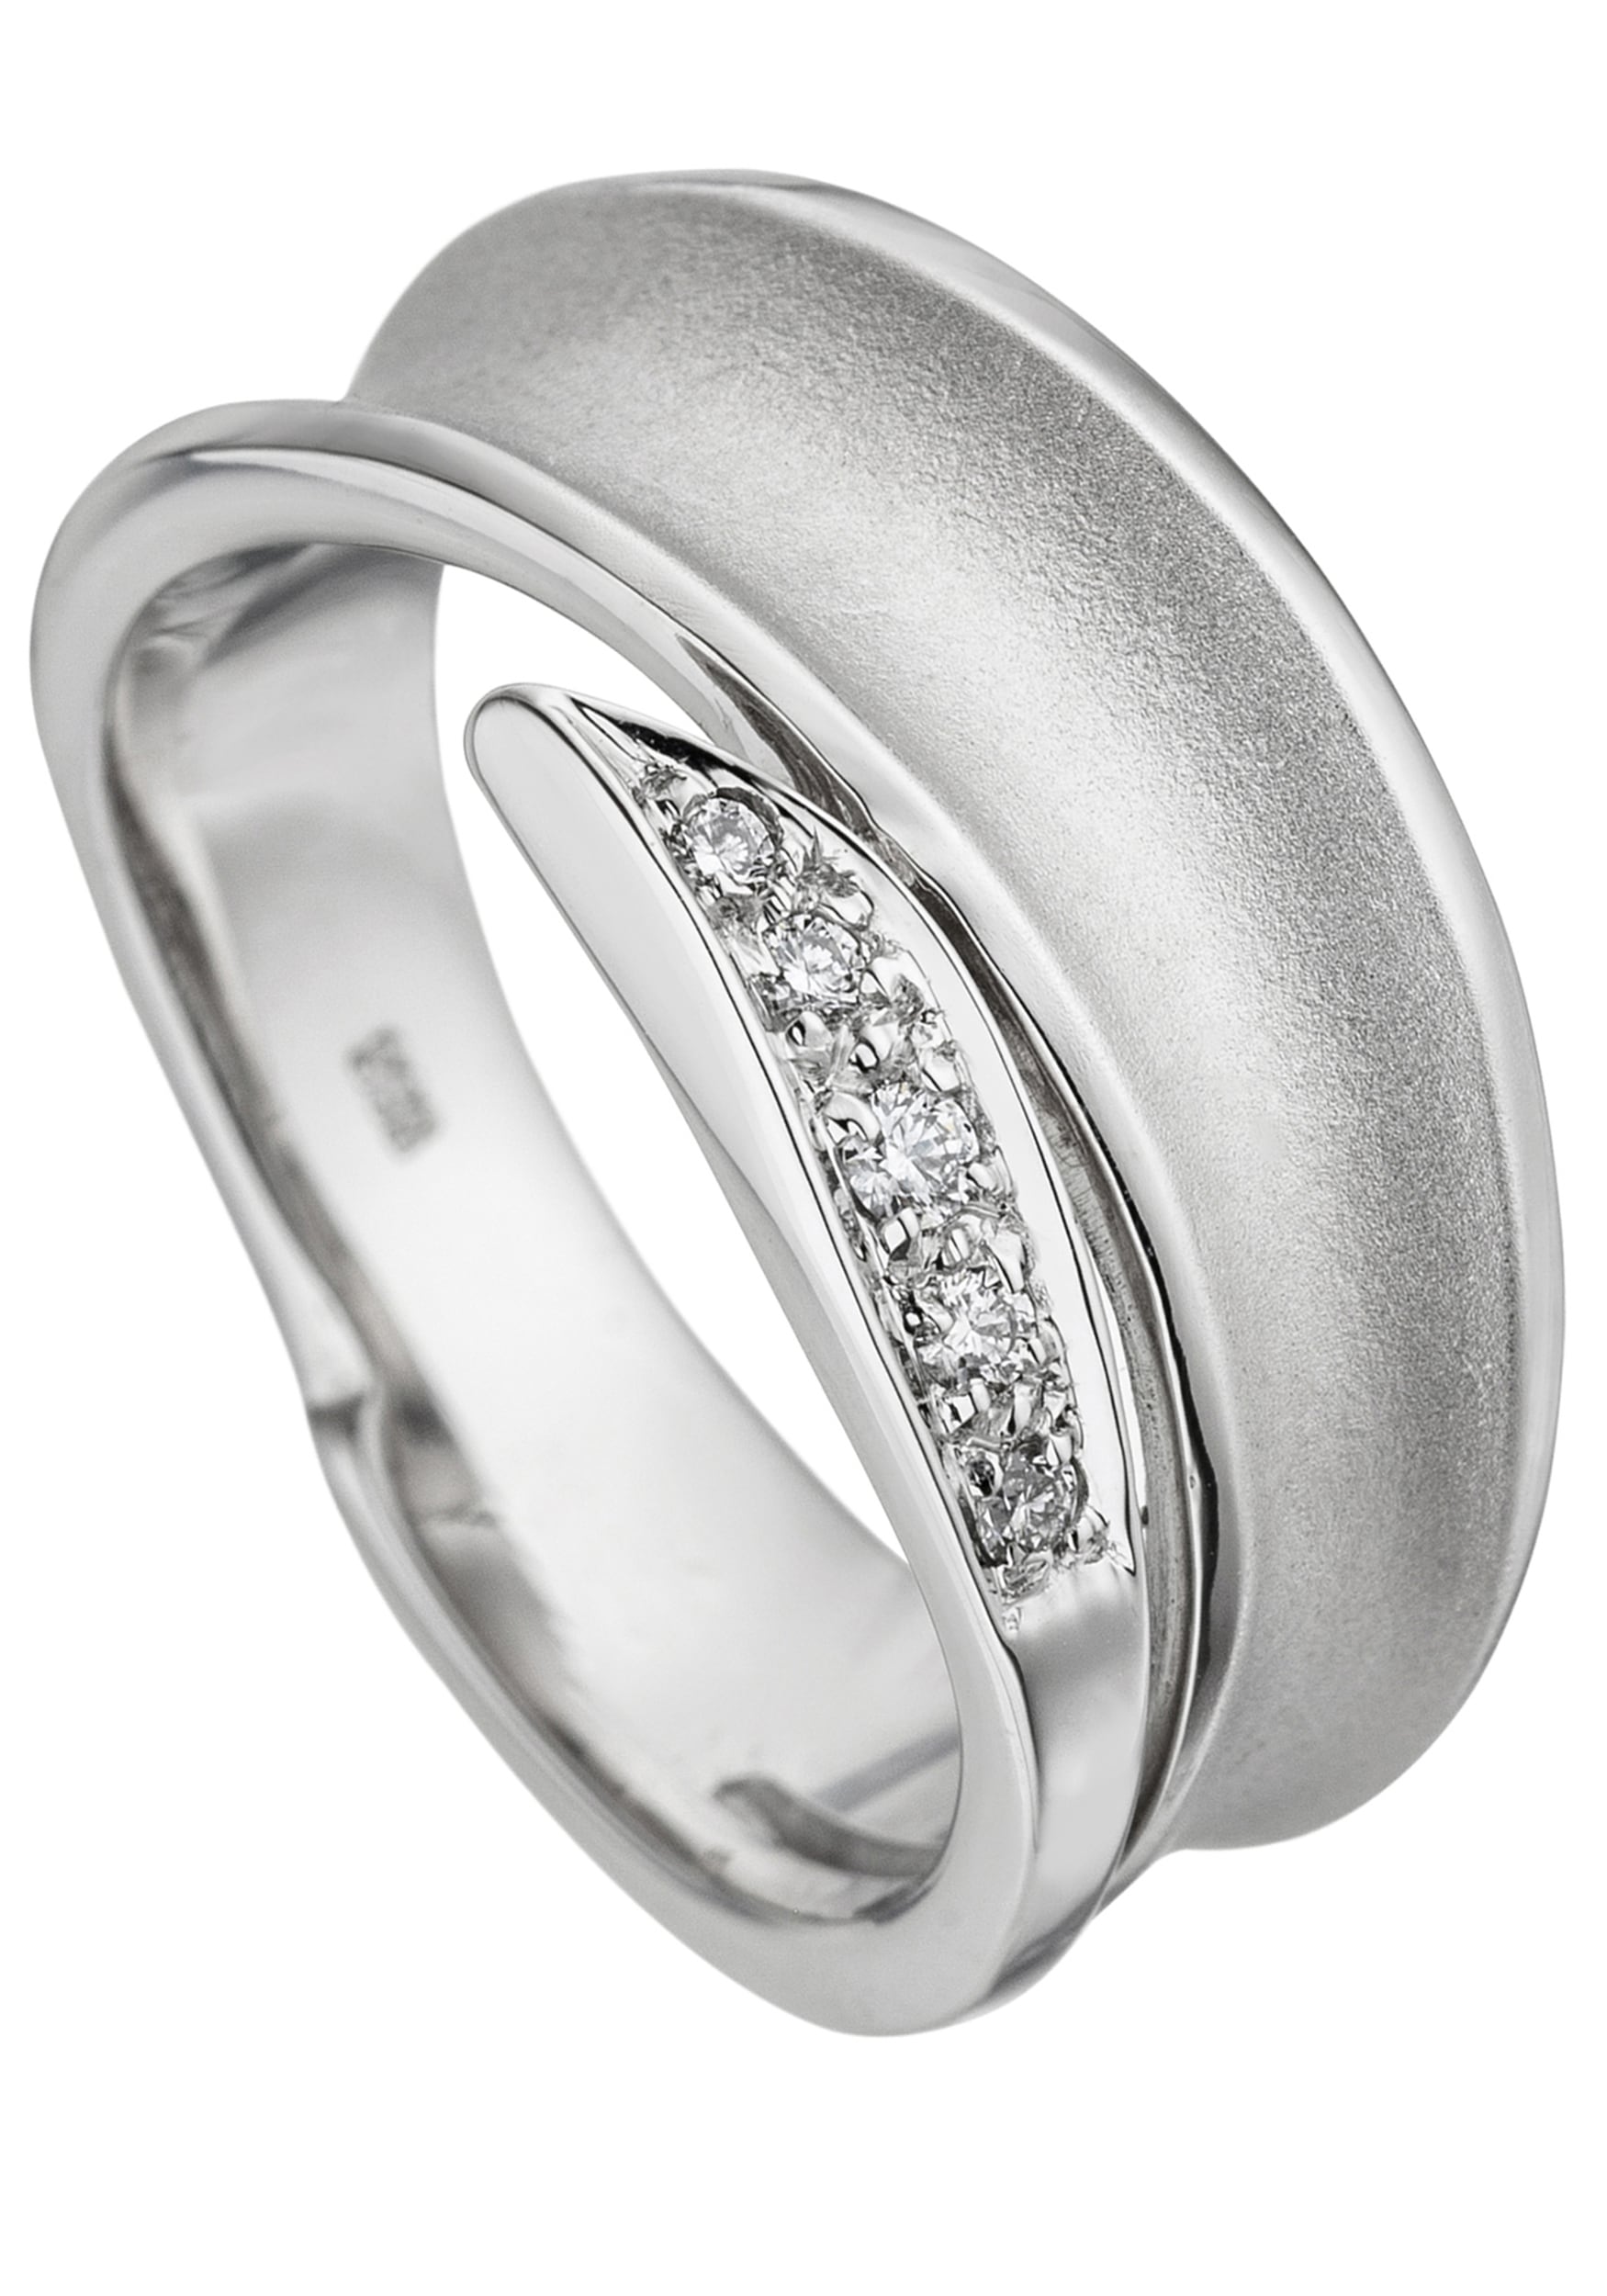 JOBO Fingerring Ring mit Weißgold 585 5 Diamanten